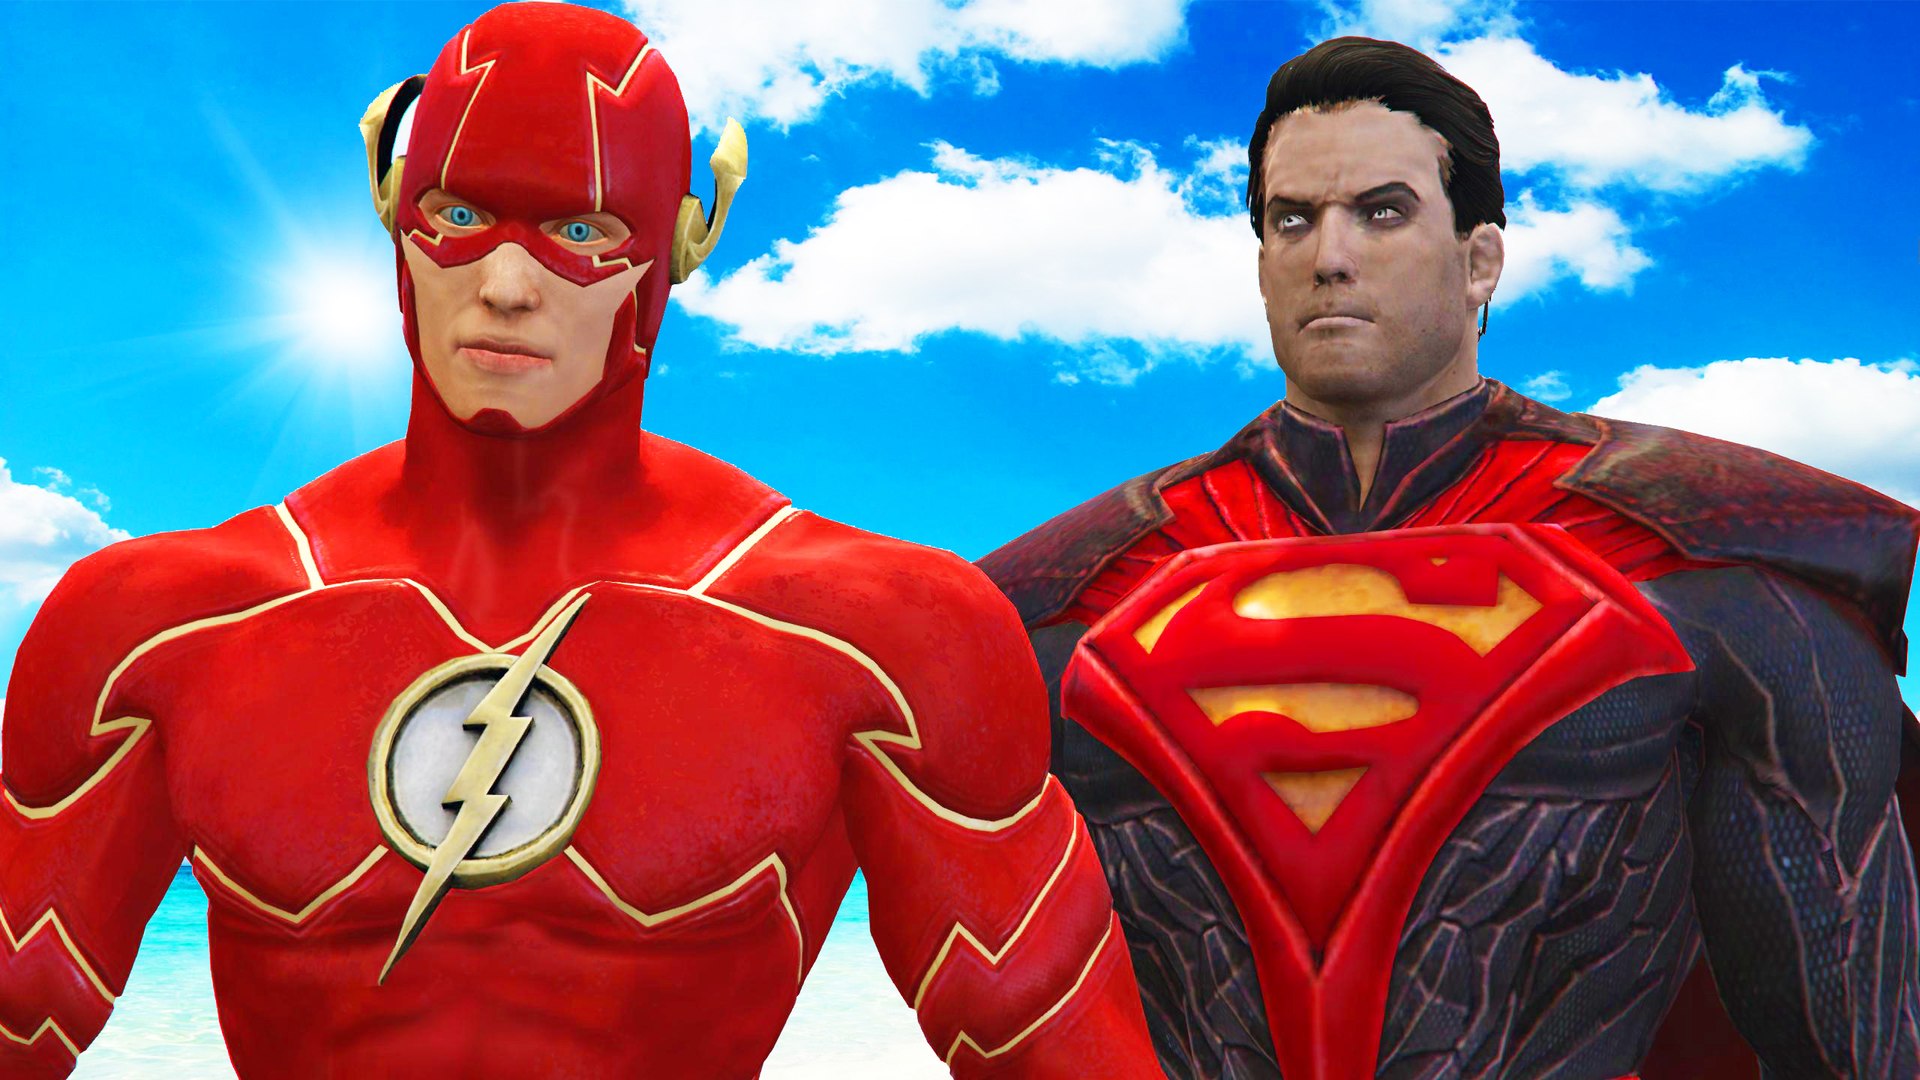 THE FLASH VS SUPERMAN REGIME - EPIC SUPERHEROES BATTLE - video Dailymotion